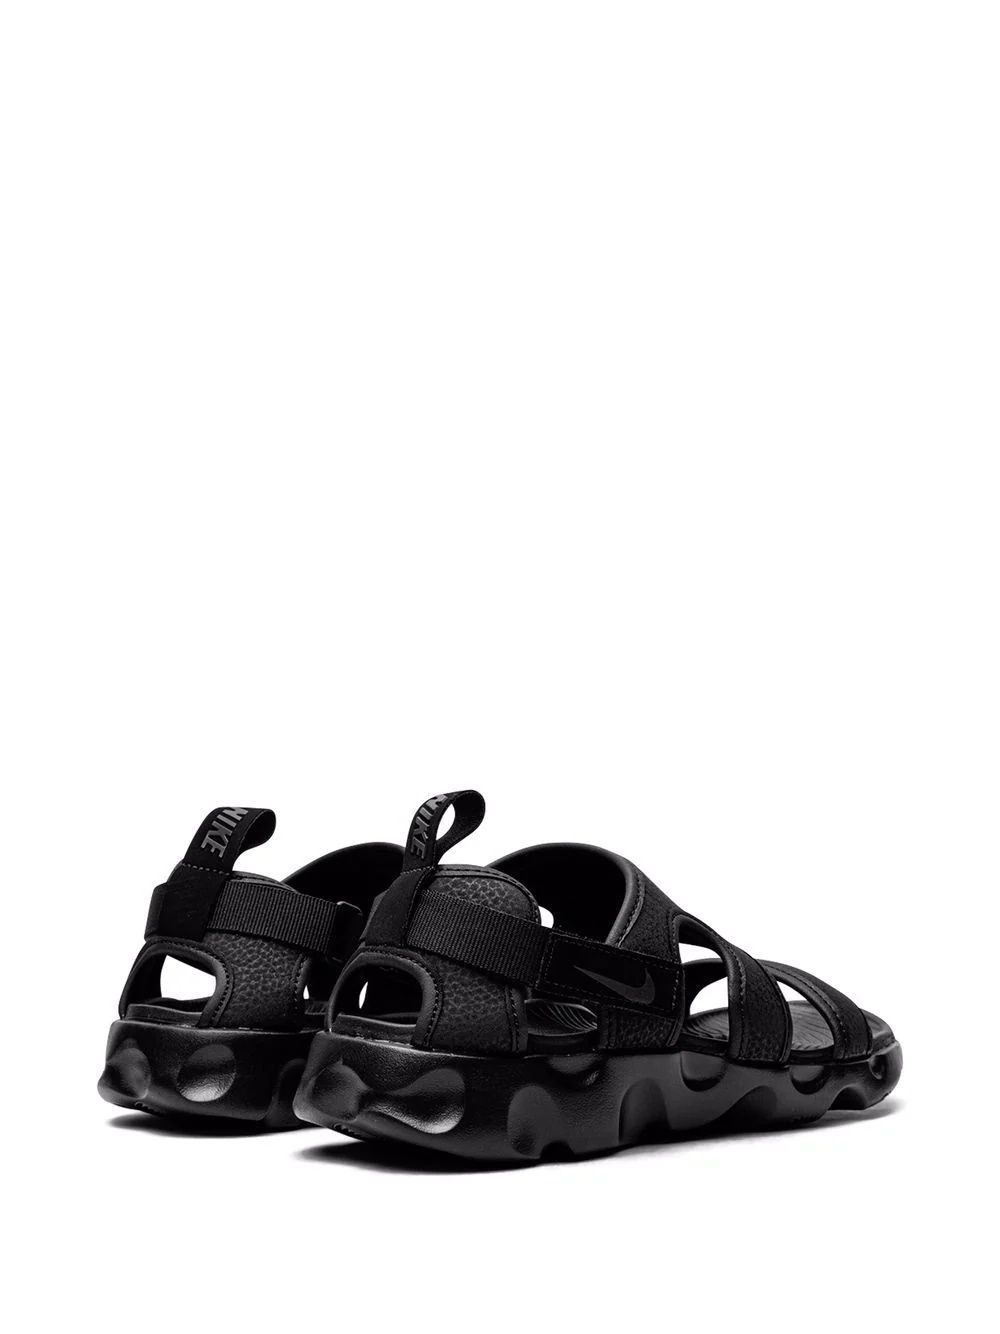 Owaysis sandals "Triple Black" - 3